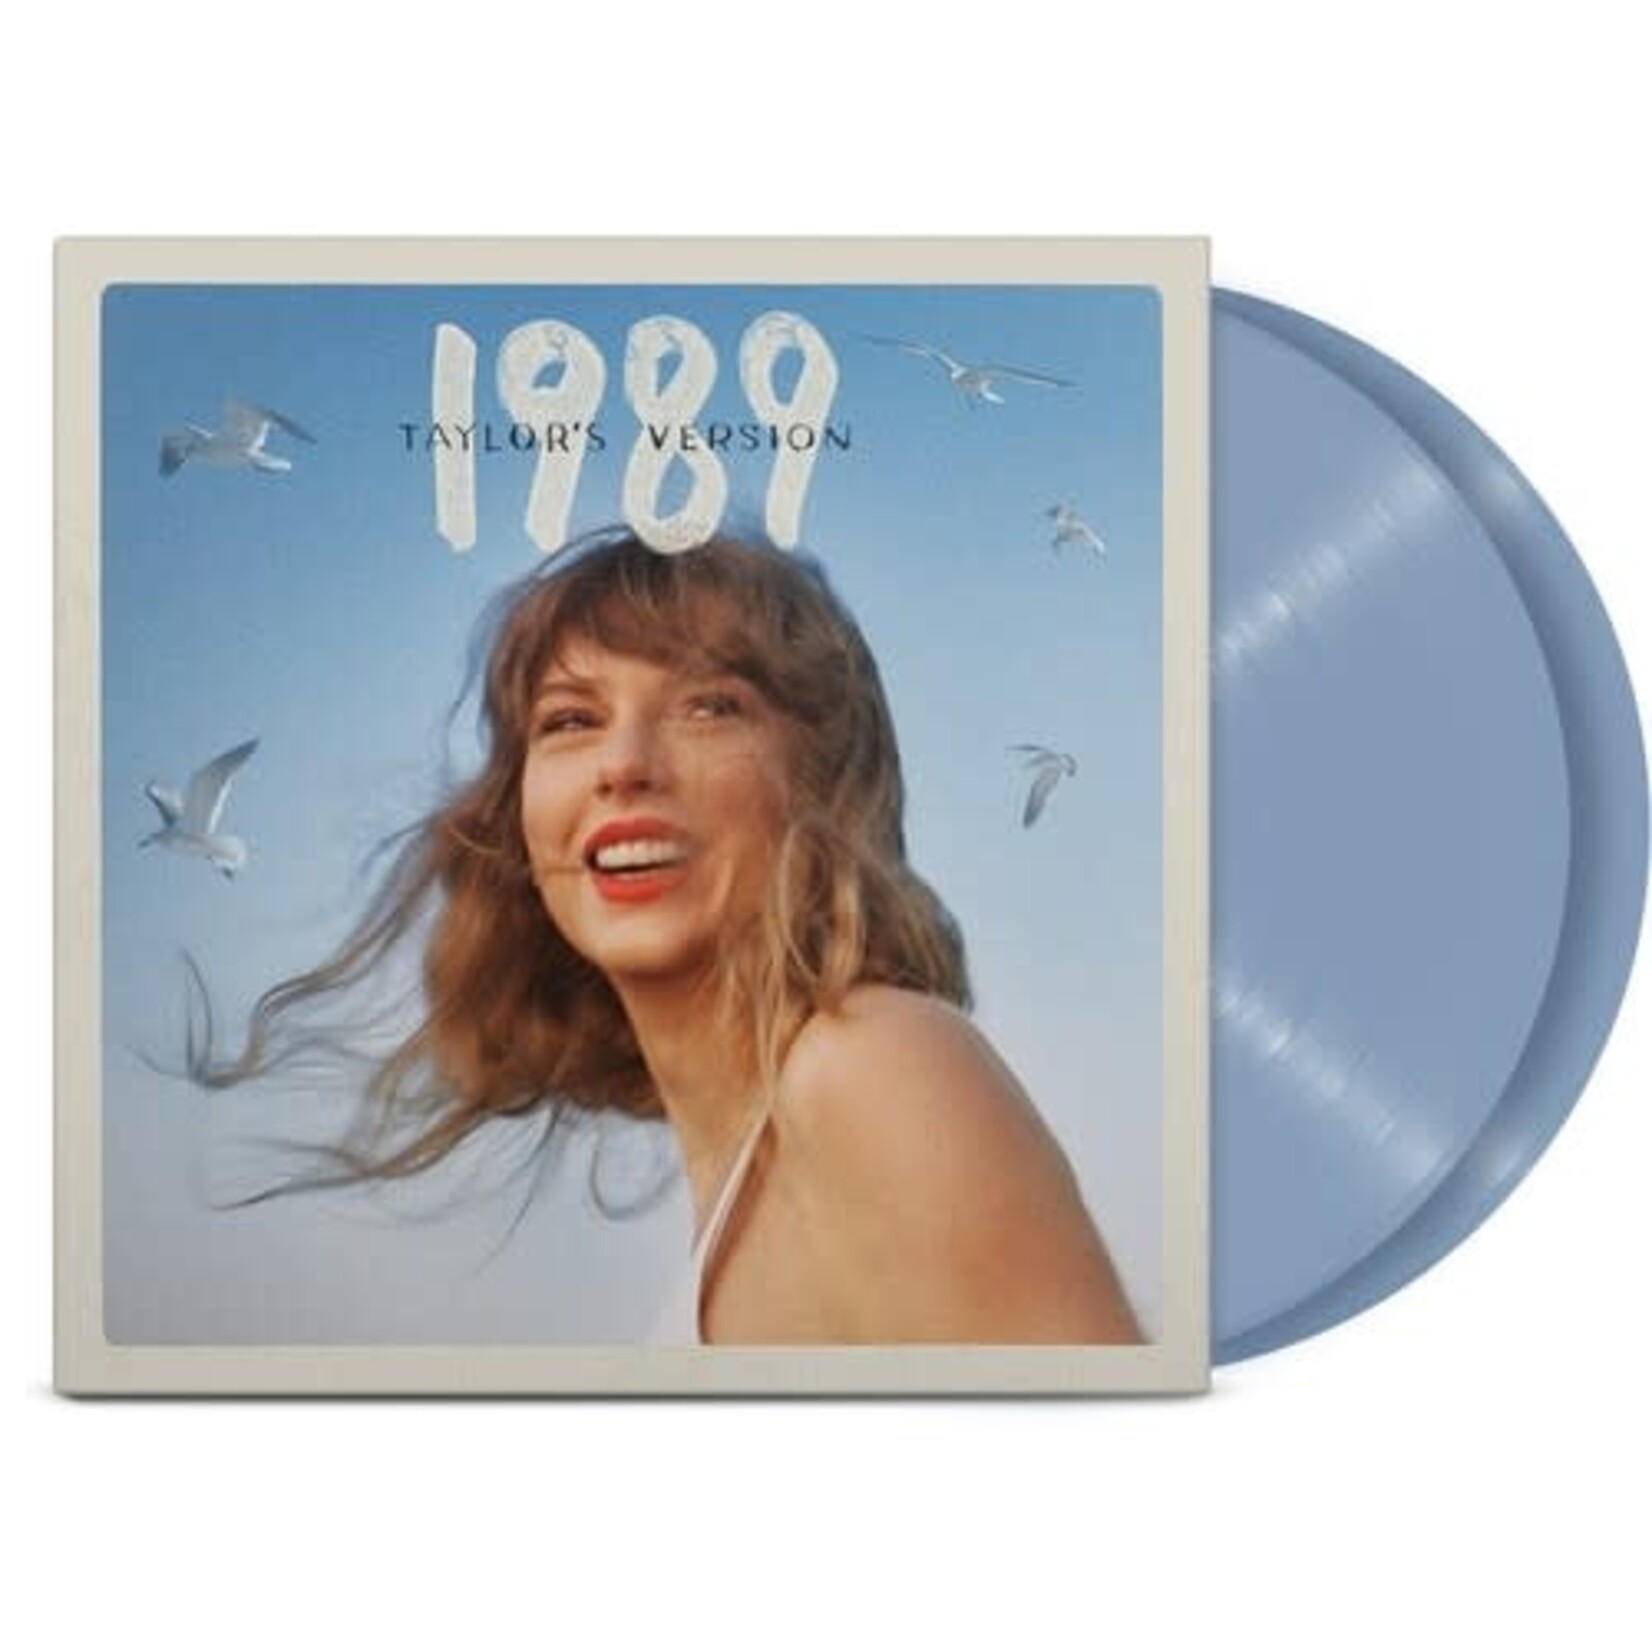 Taylor Swift - 1989 (Taylor's Version) (Blue Vinyl) [2LP]